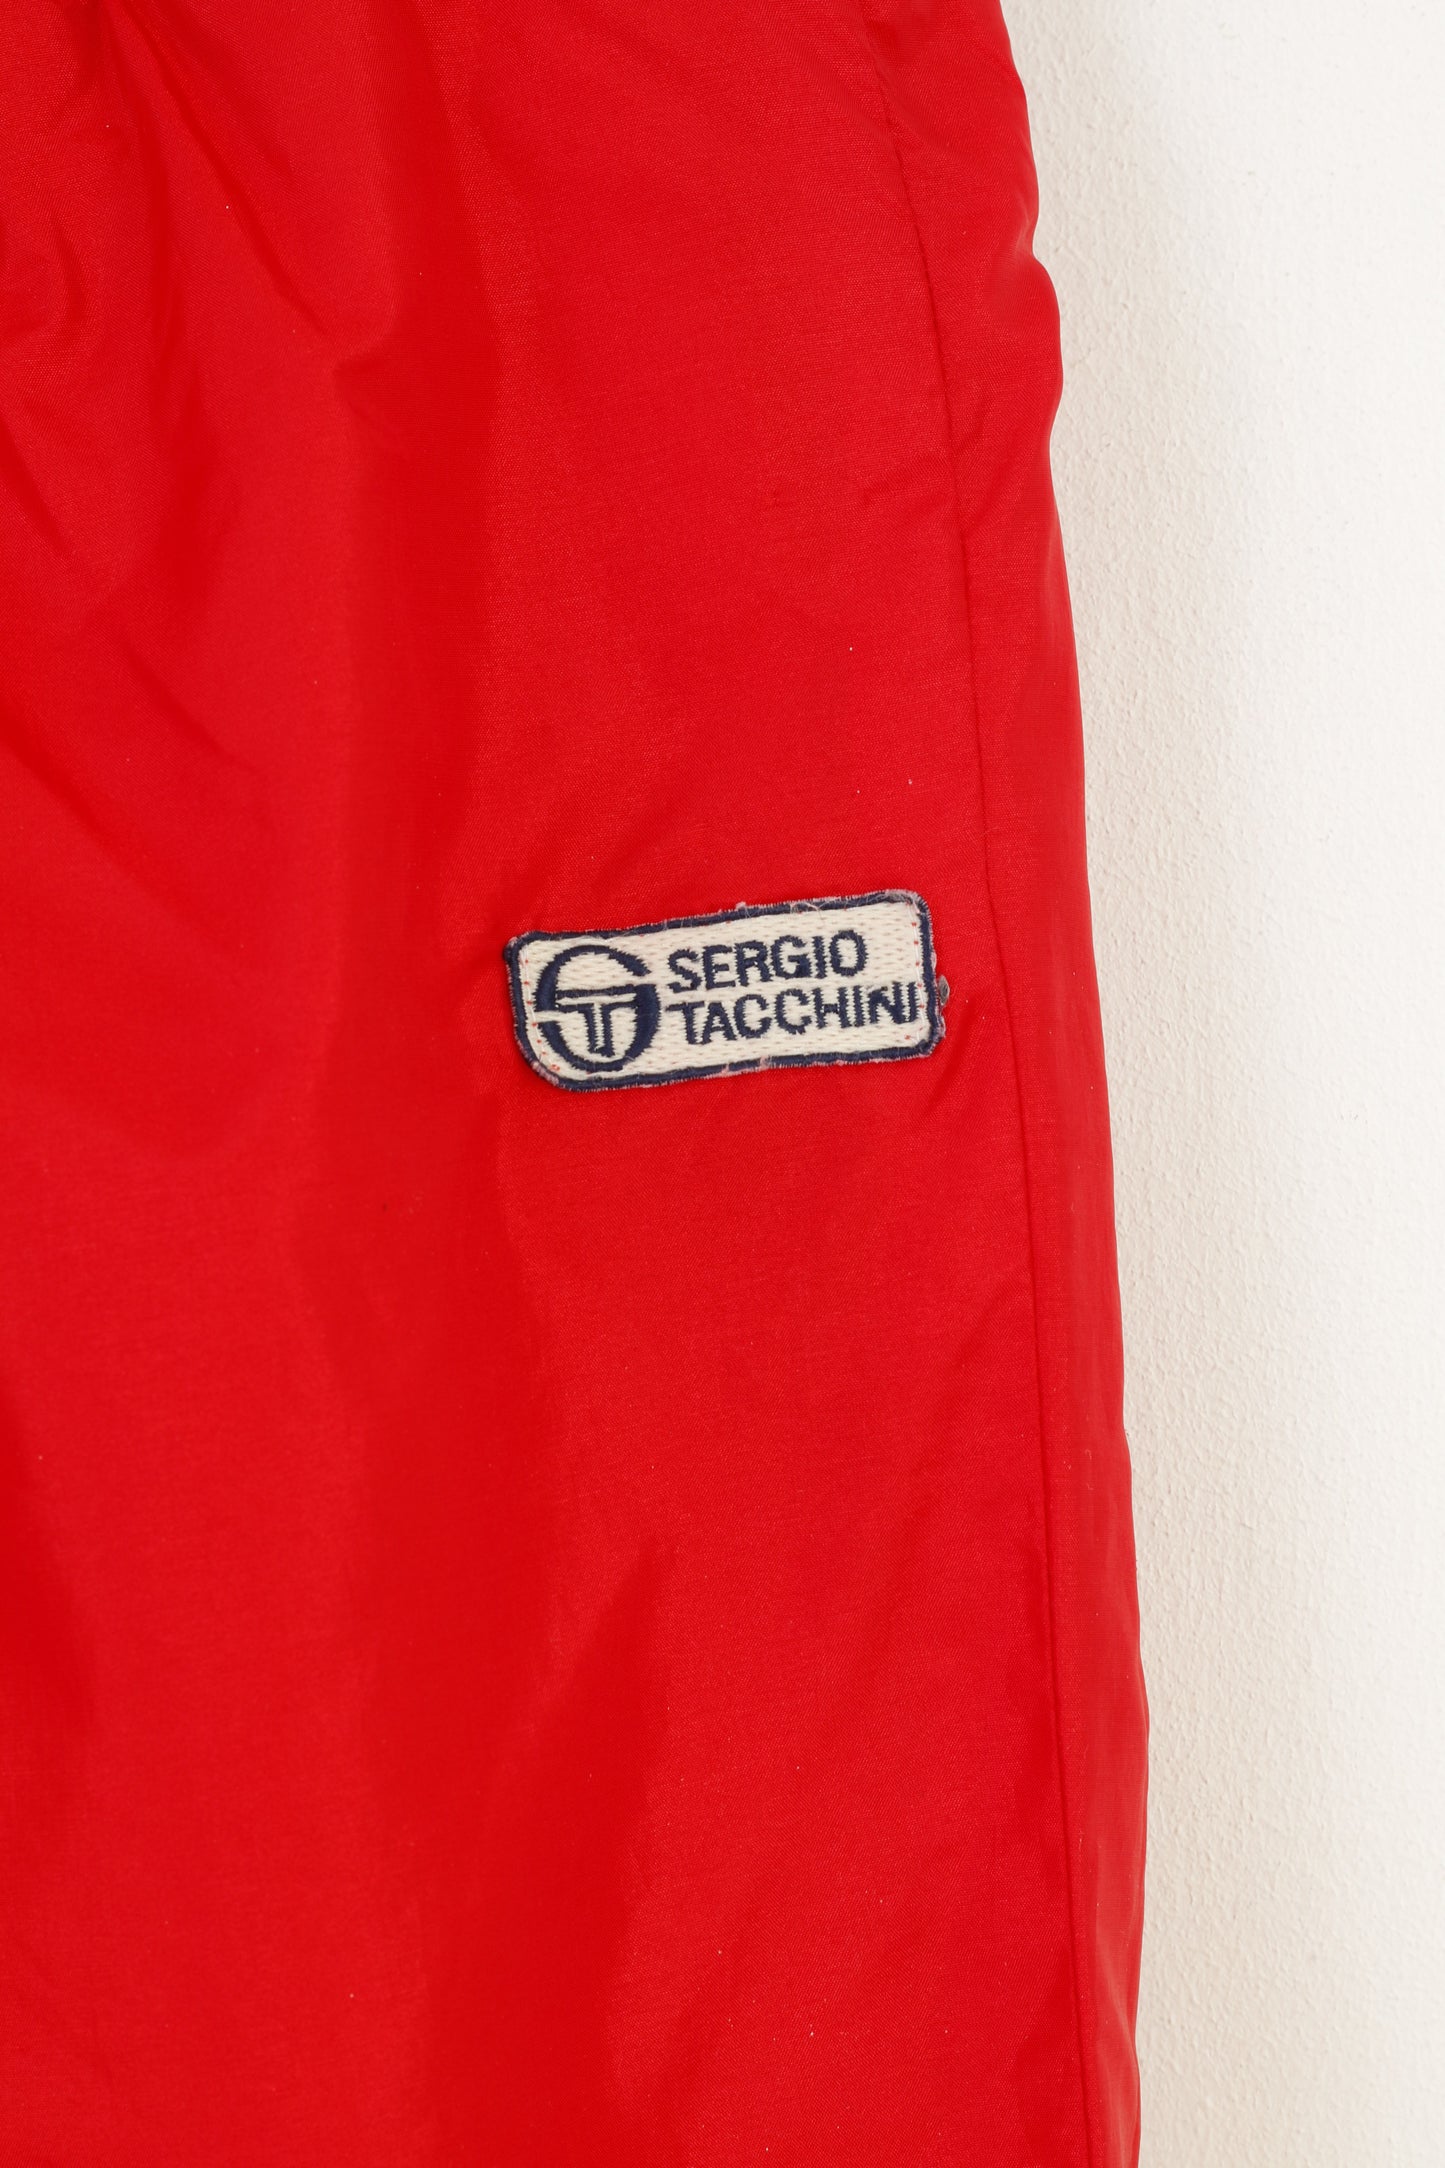 Sergio Tacchini Women 12 M Trousers Red Vintage 90s Sportswear Nylon Training Pants